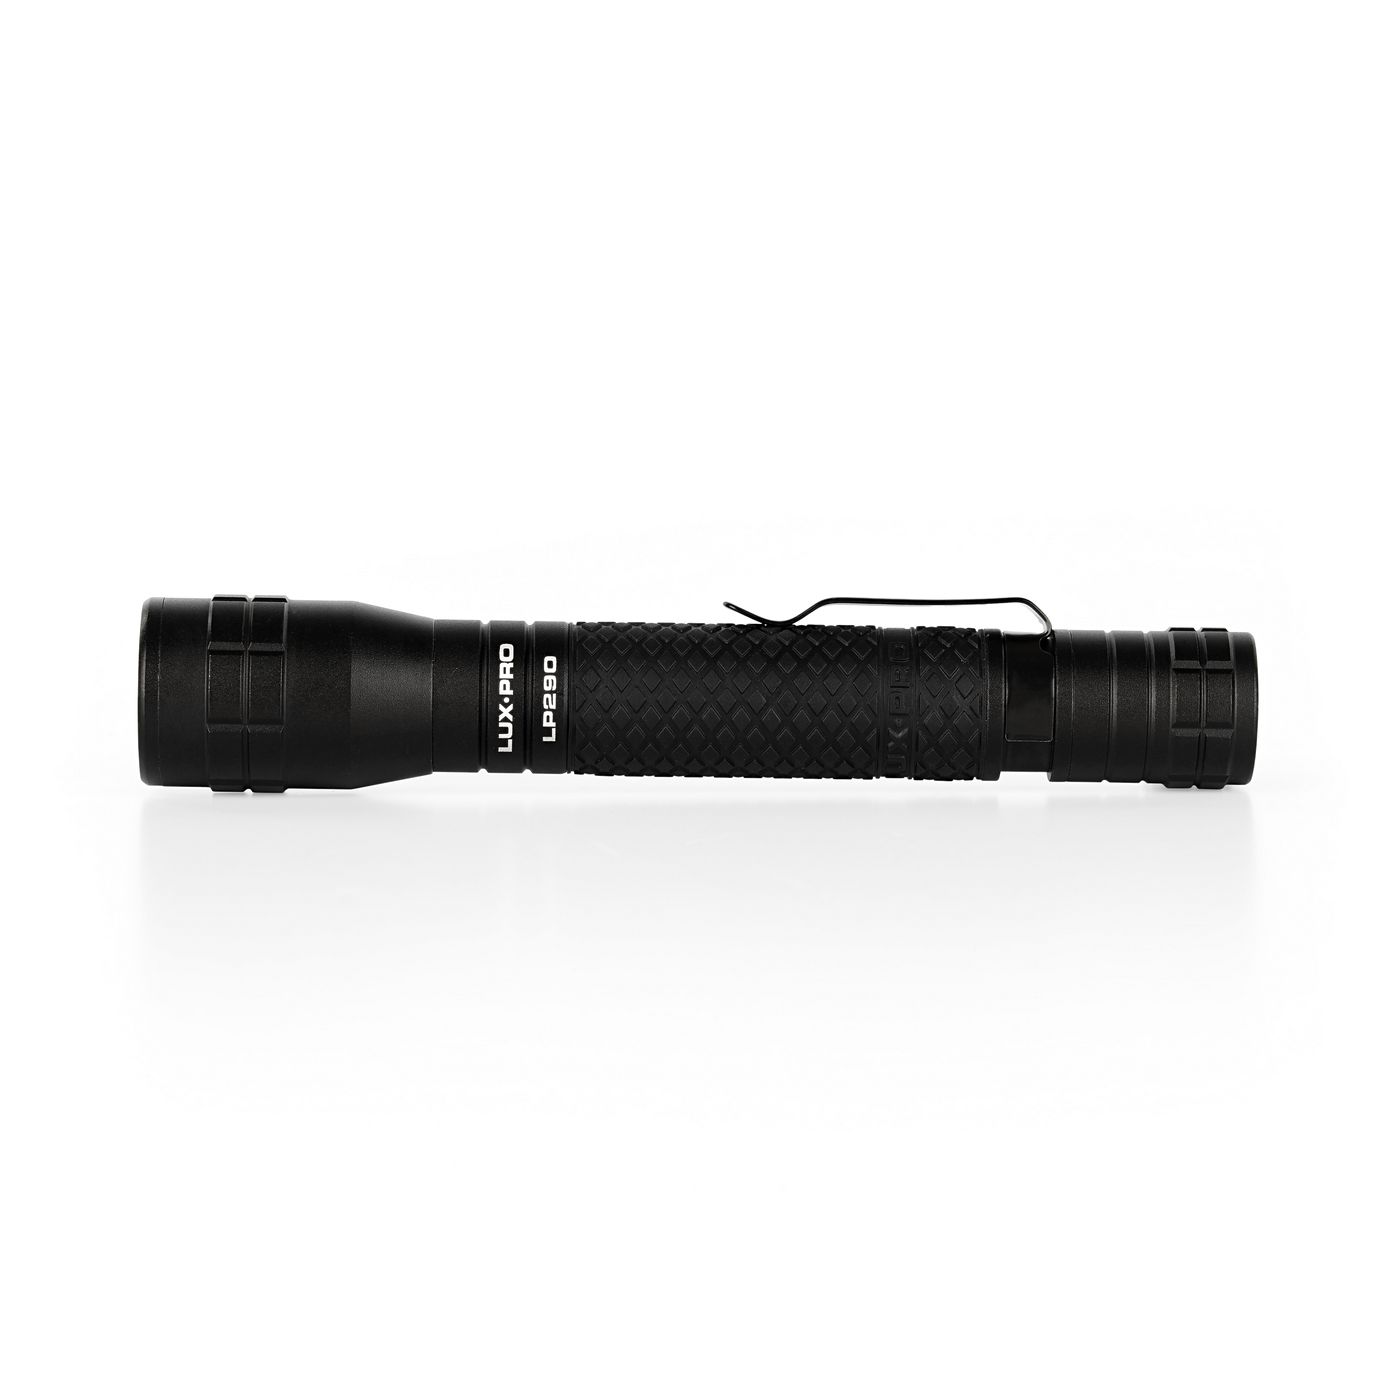 LP290 Two Pack LUXPRO 250 Lumen CREE LED Tactical Handheld Pocket Flashlight 